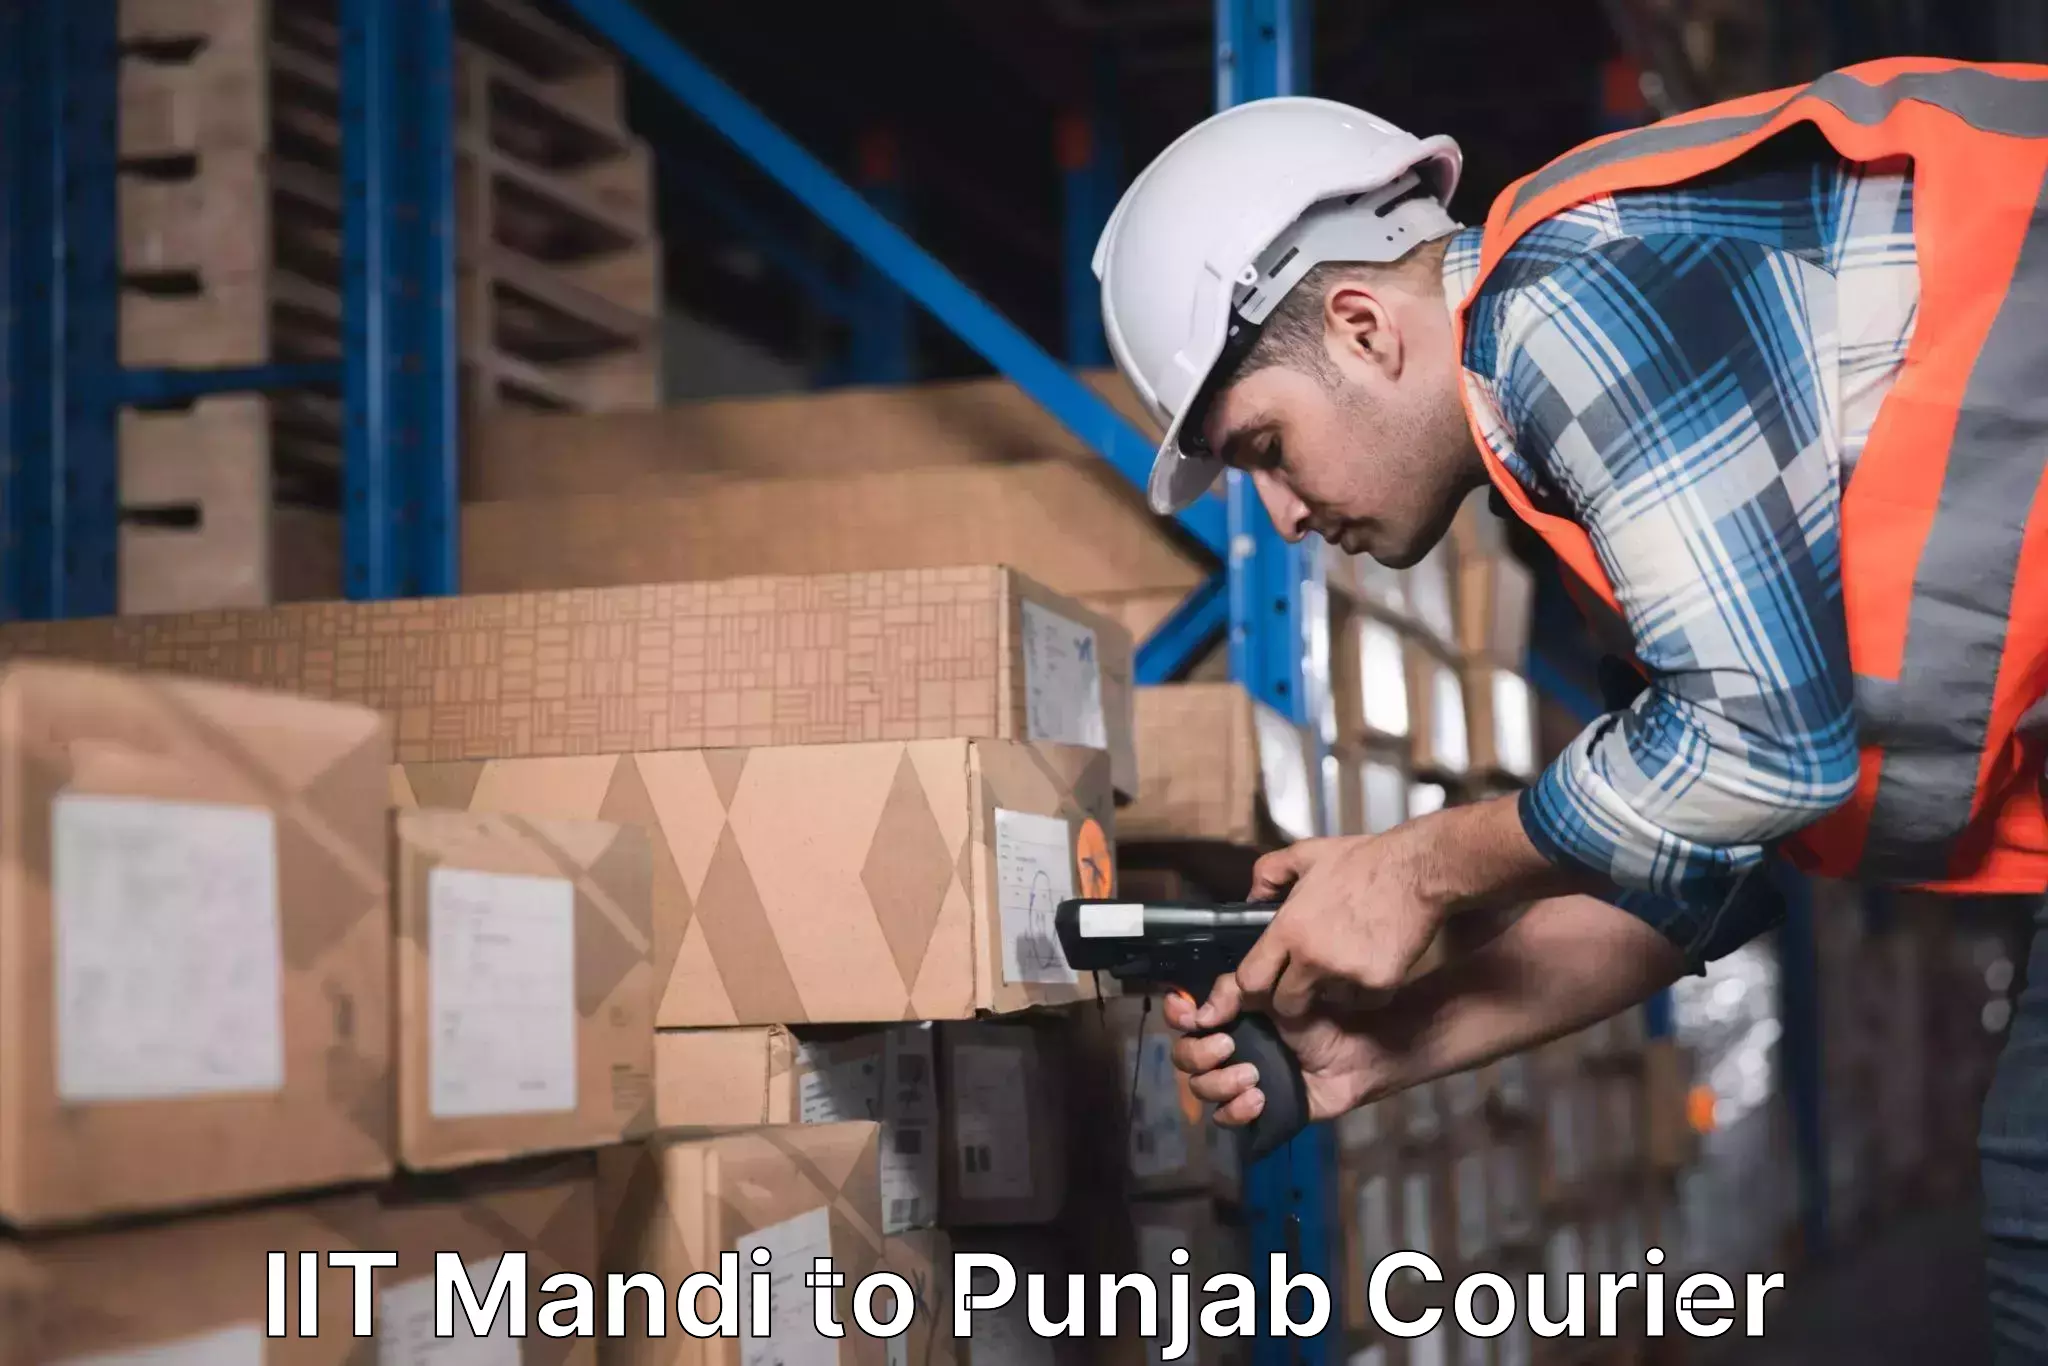 Courier service comparison IIT Mandi to Nawanshahr